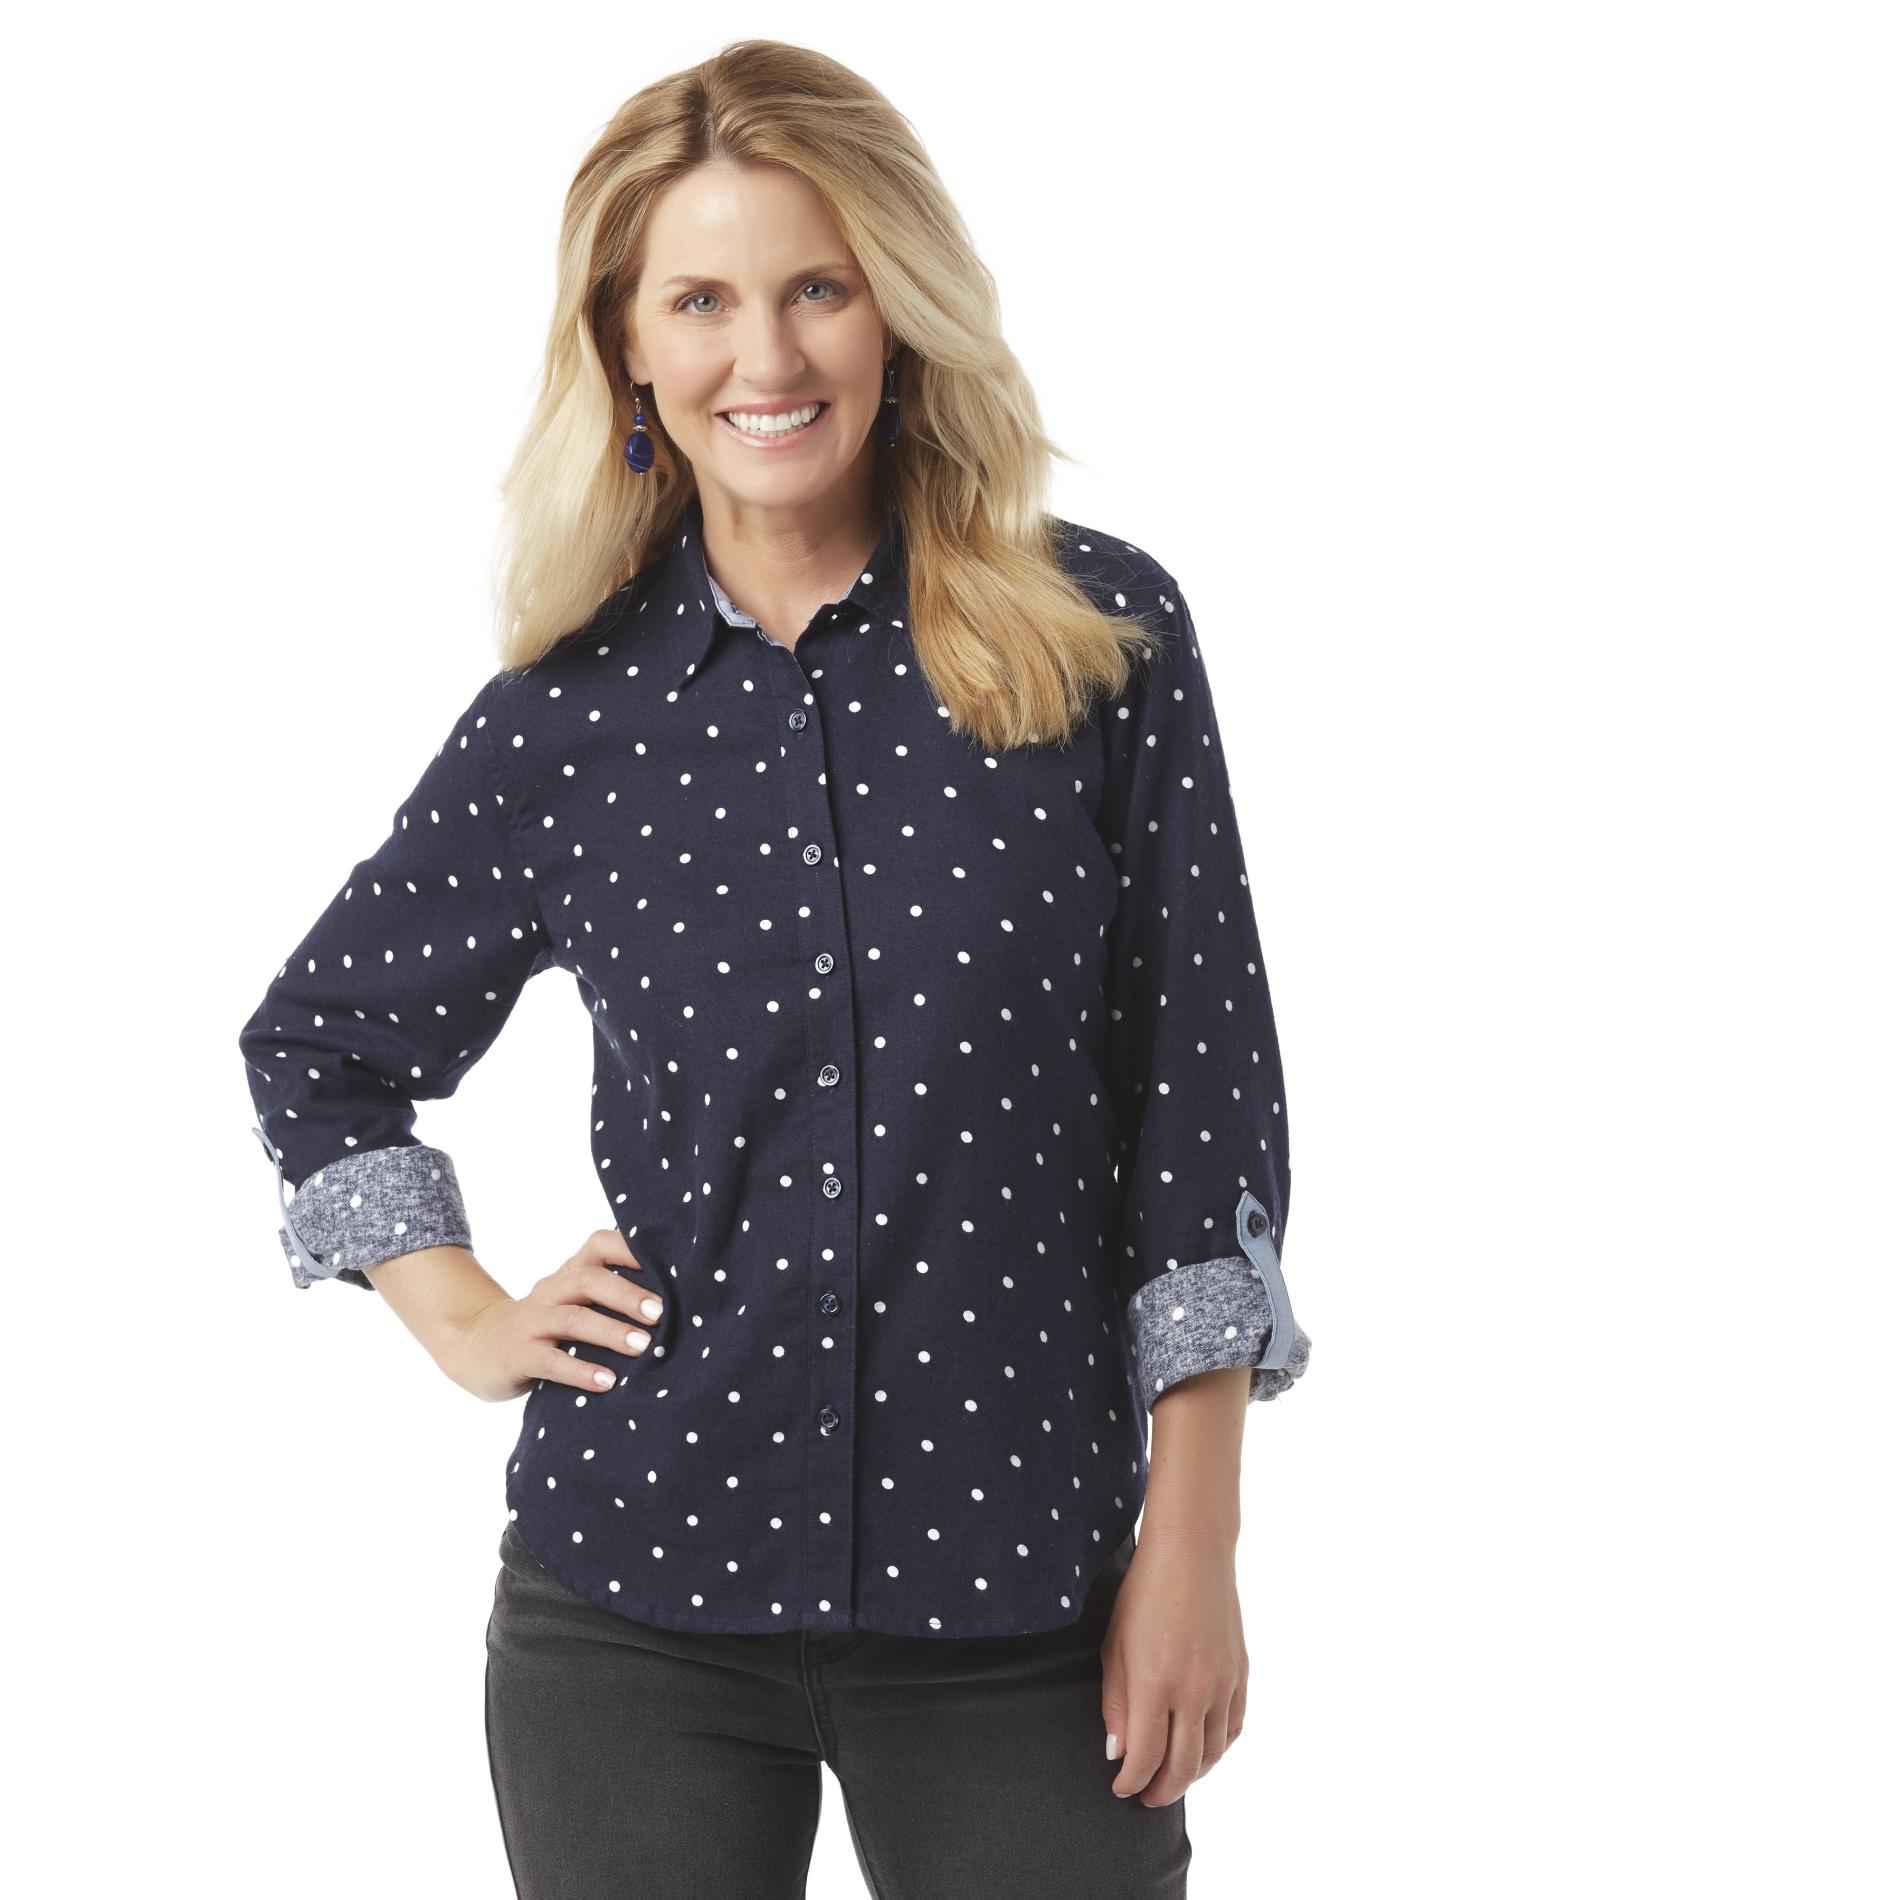 Basic Editions Women's Flannel Shirt - Polka Dot